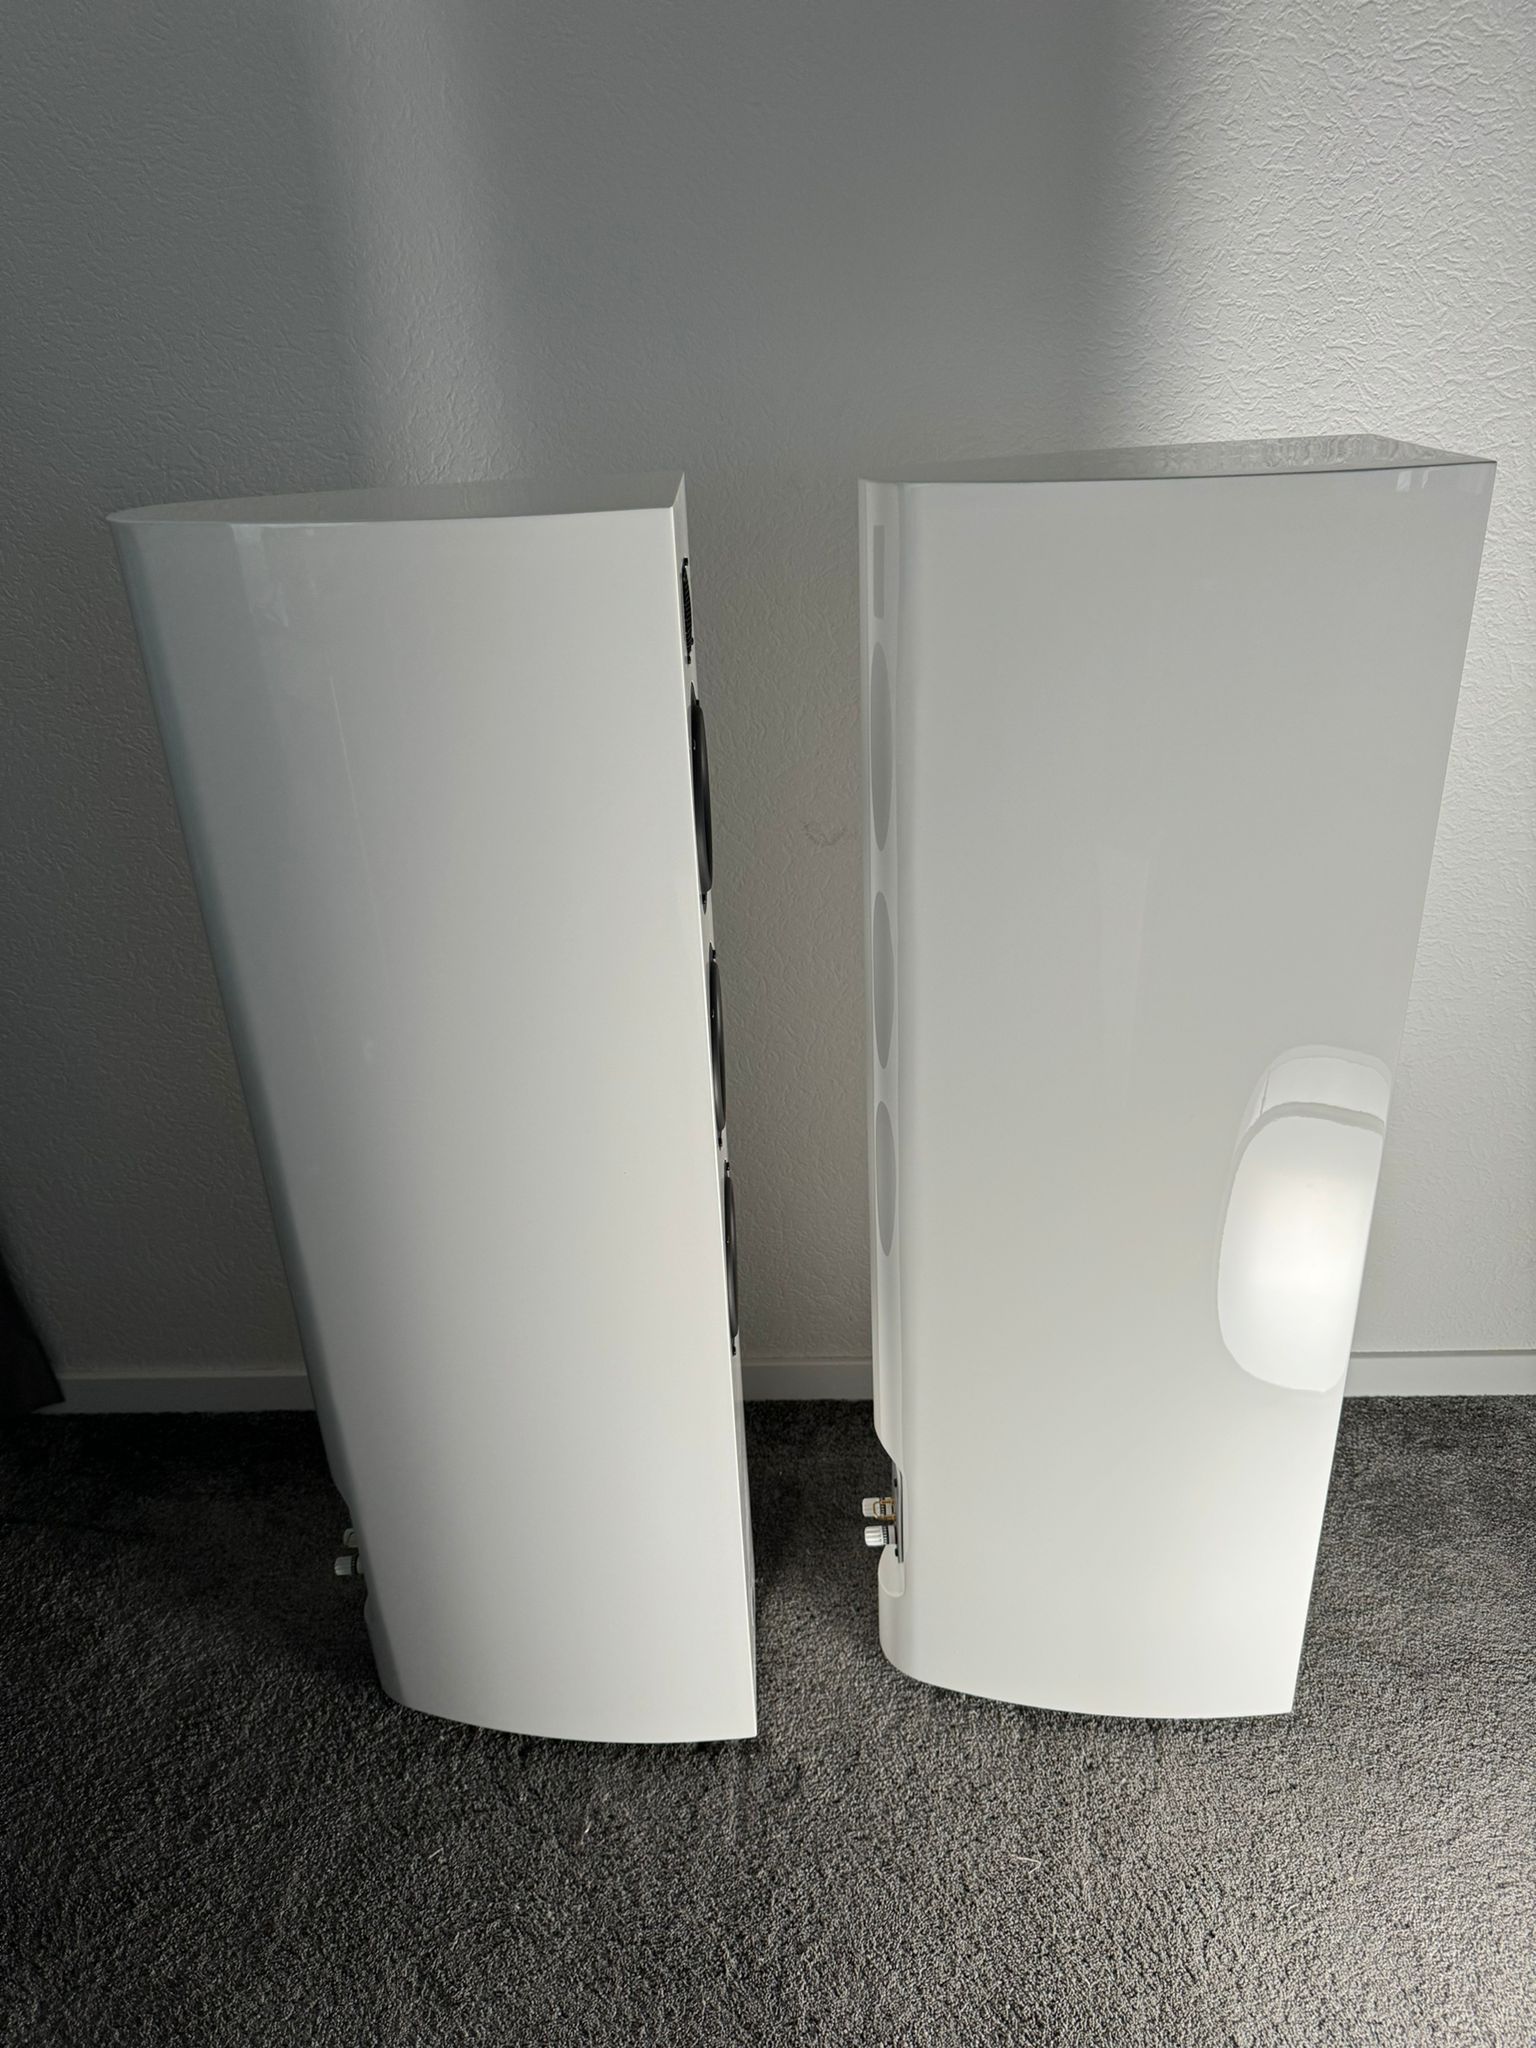 Gauder Akustik Arcona 100 MK2 speakers in white from 2020 8